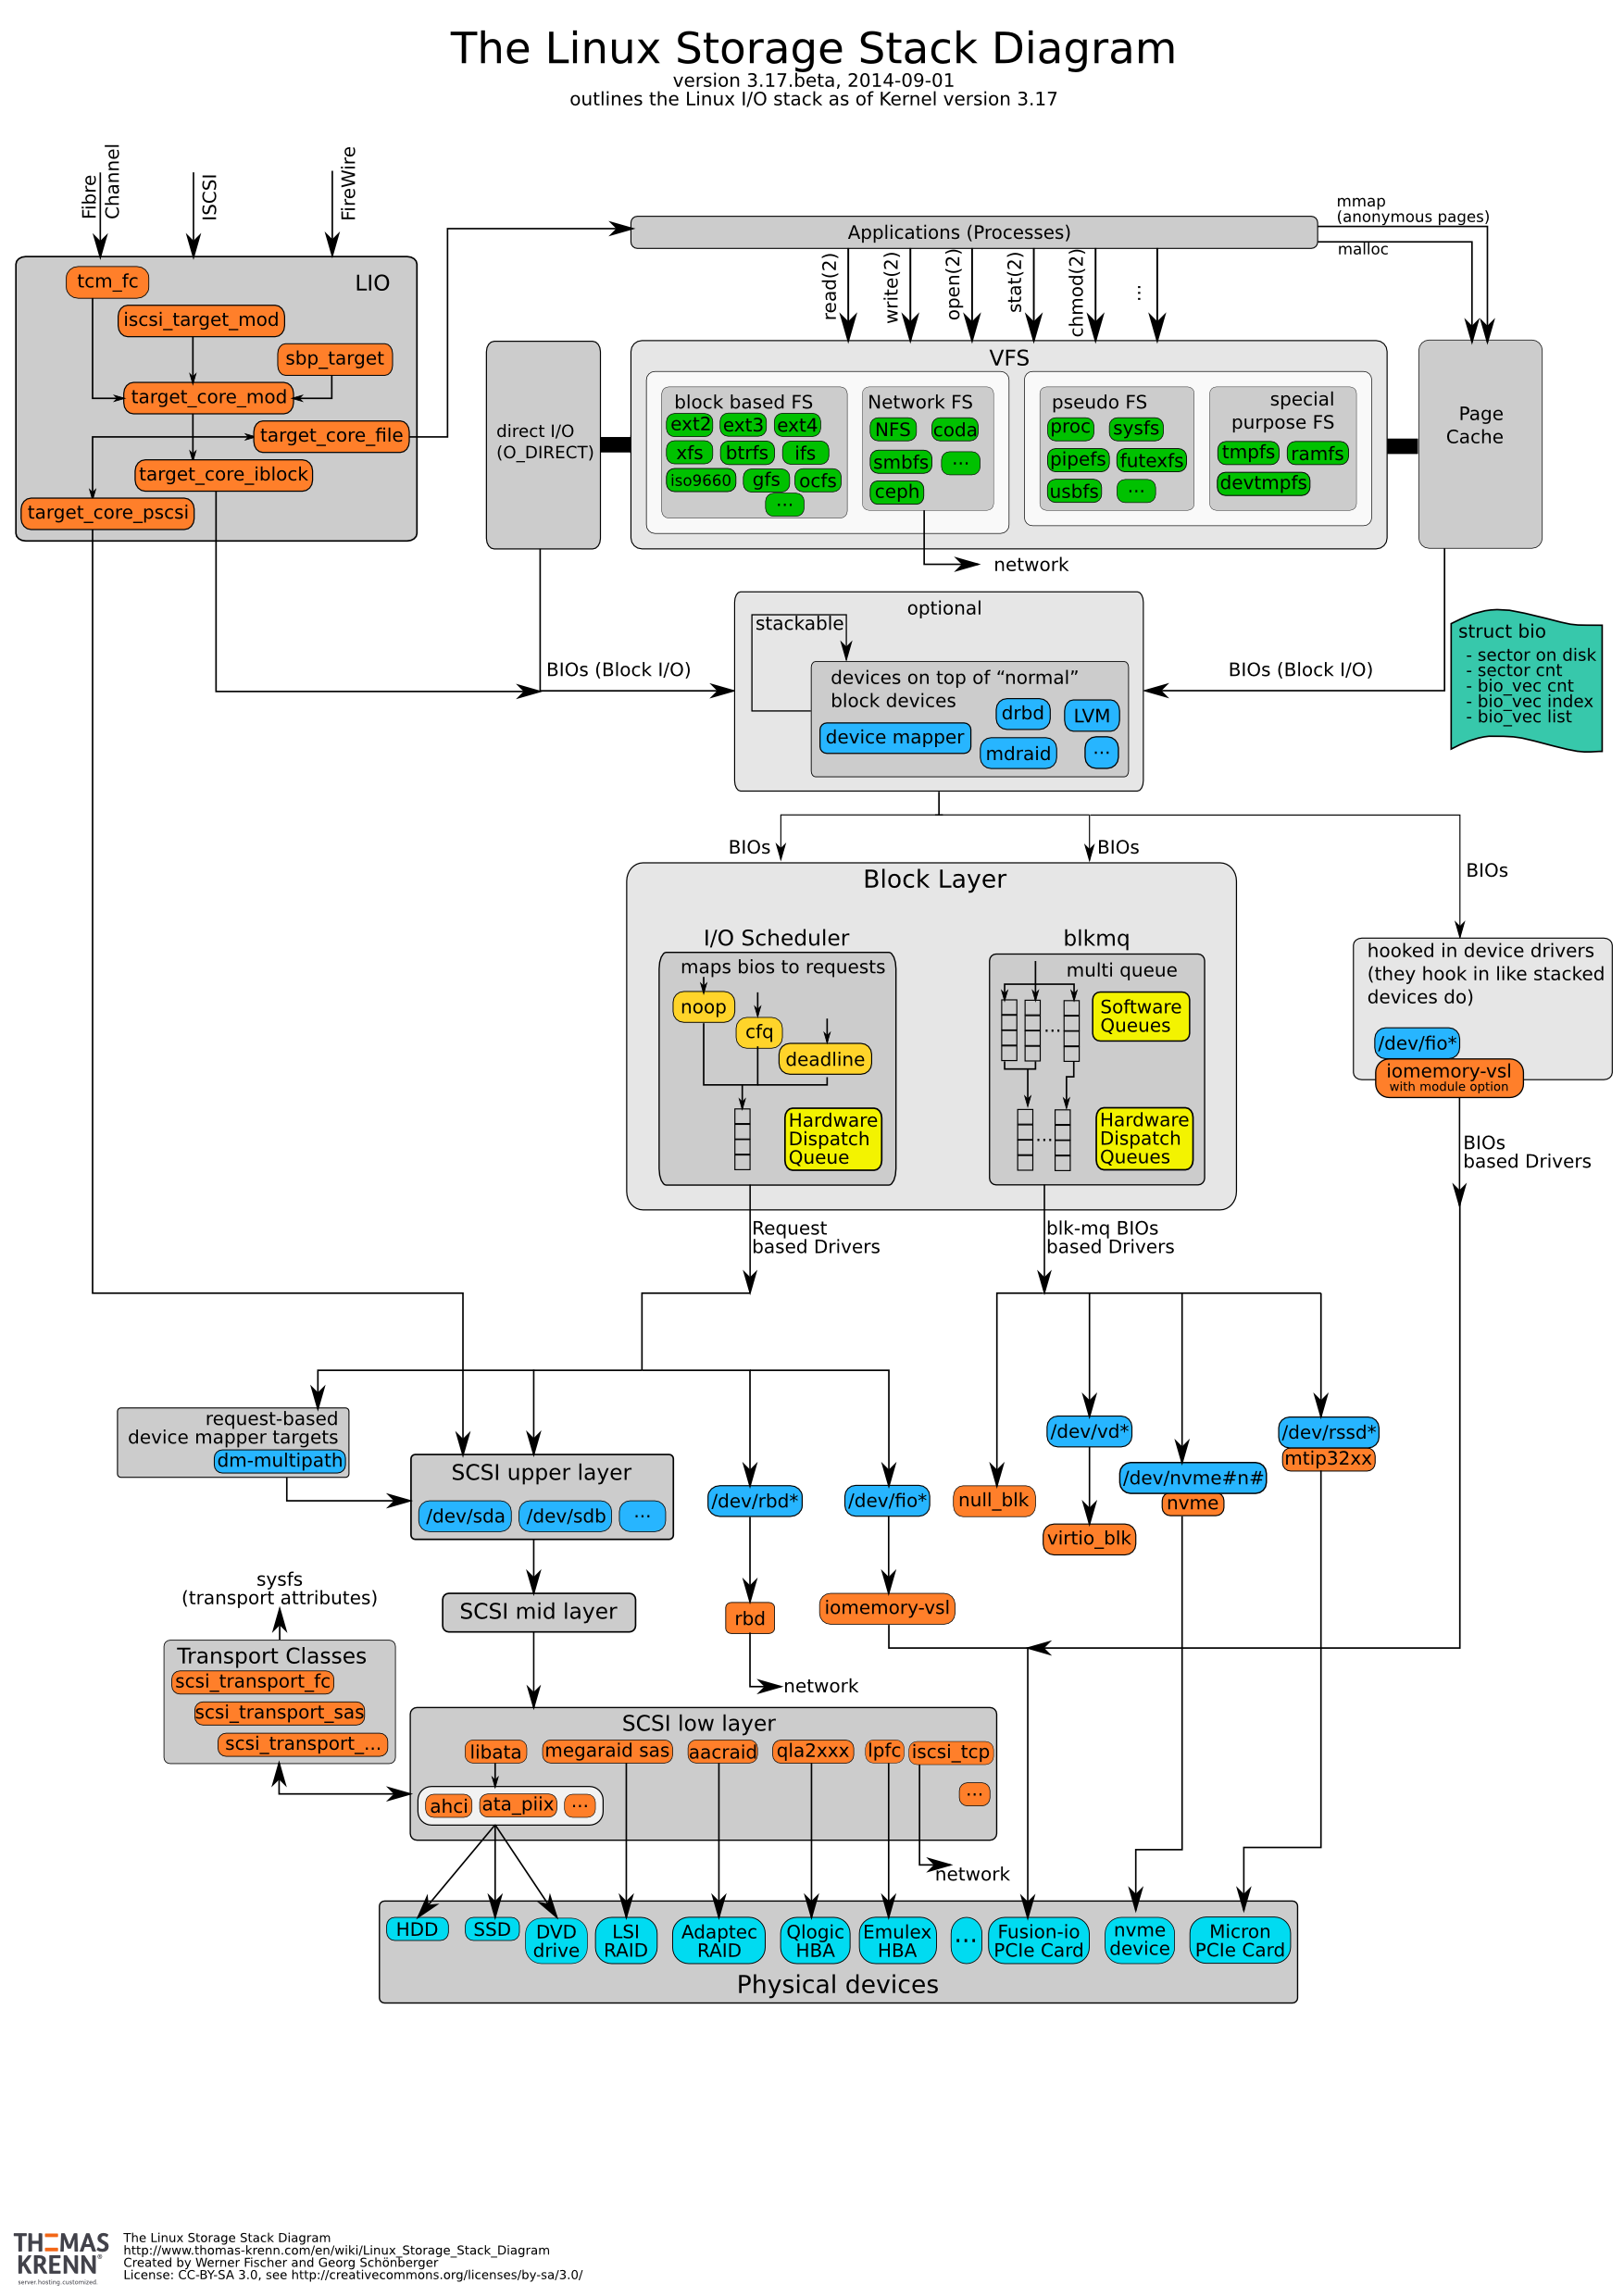 Linux I/O Stack Diagram v3.17